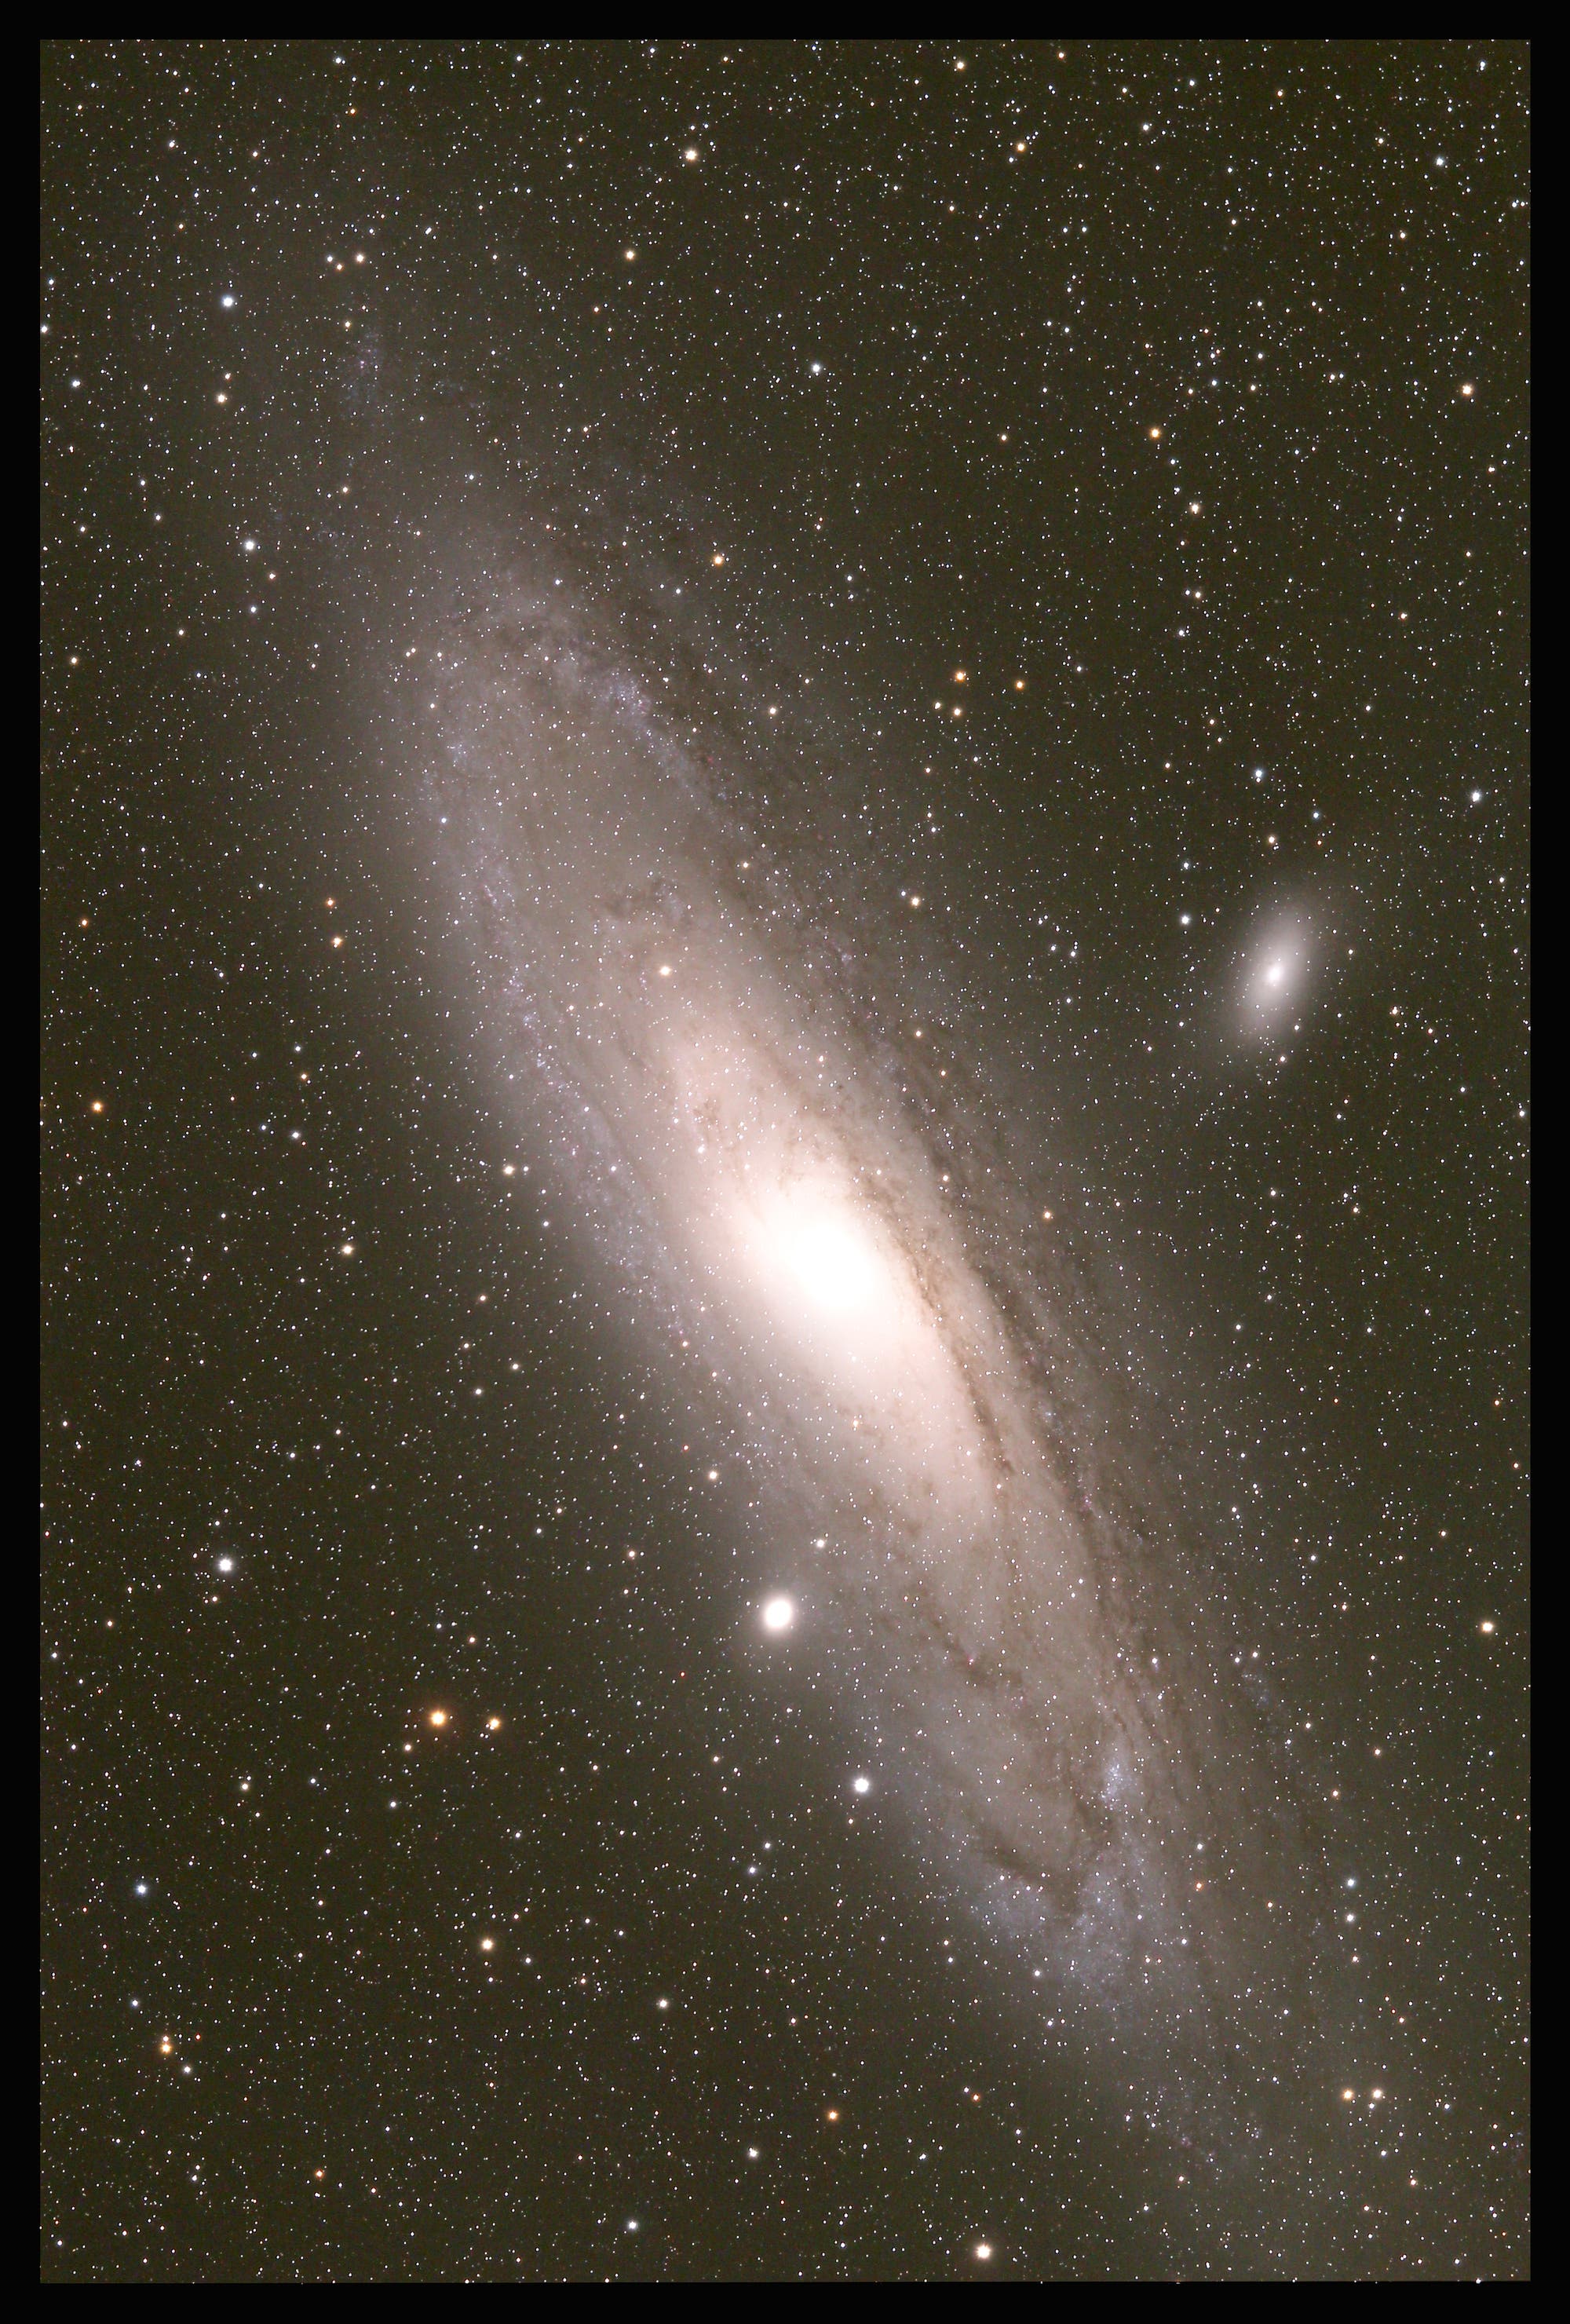 M31 Andromeda-Galaxie